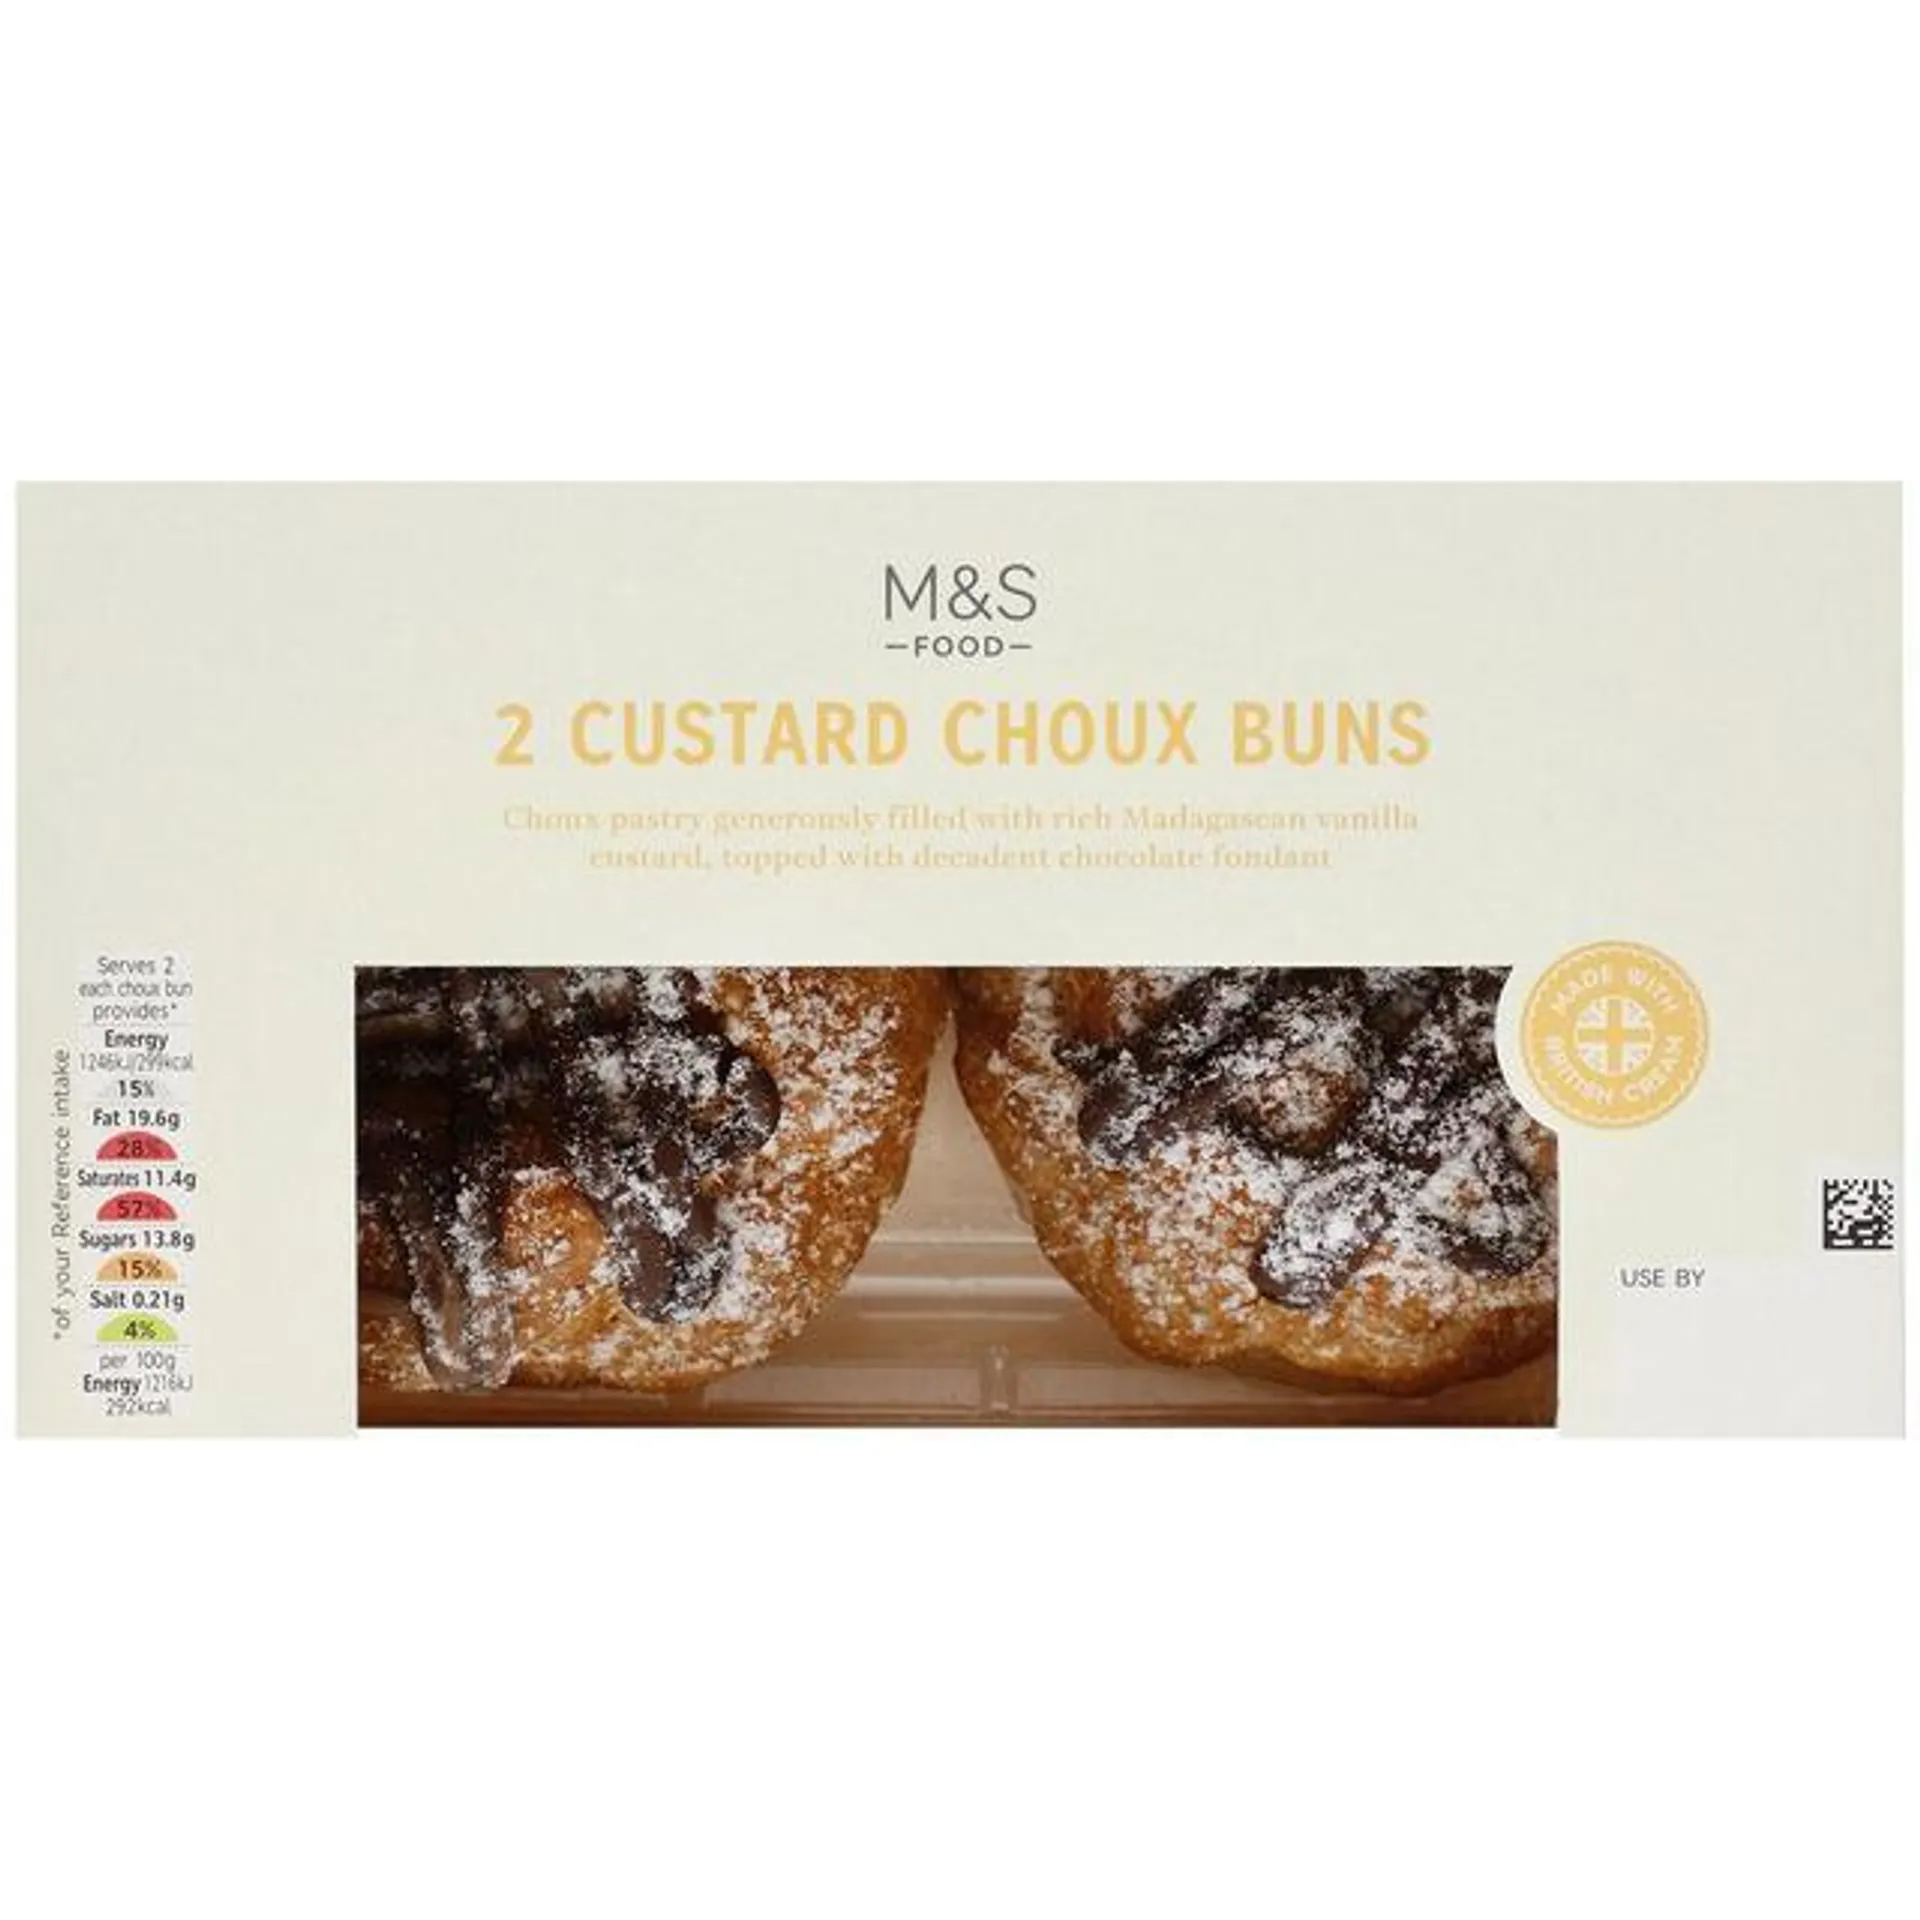 M&S Custard Choux Buns 2 per pack